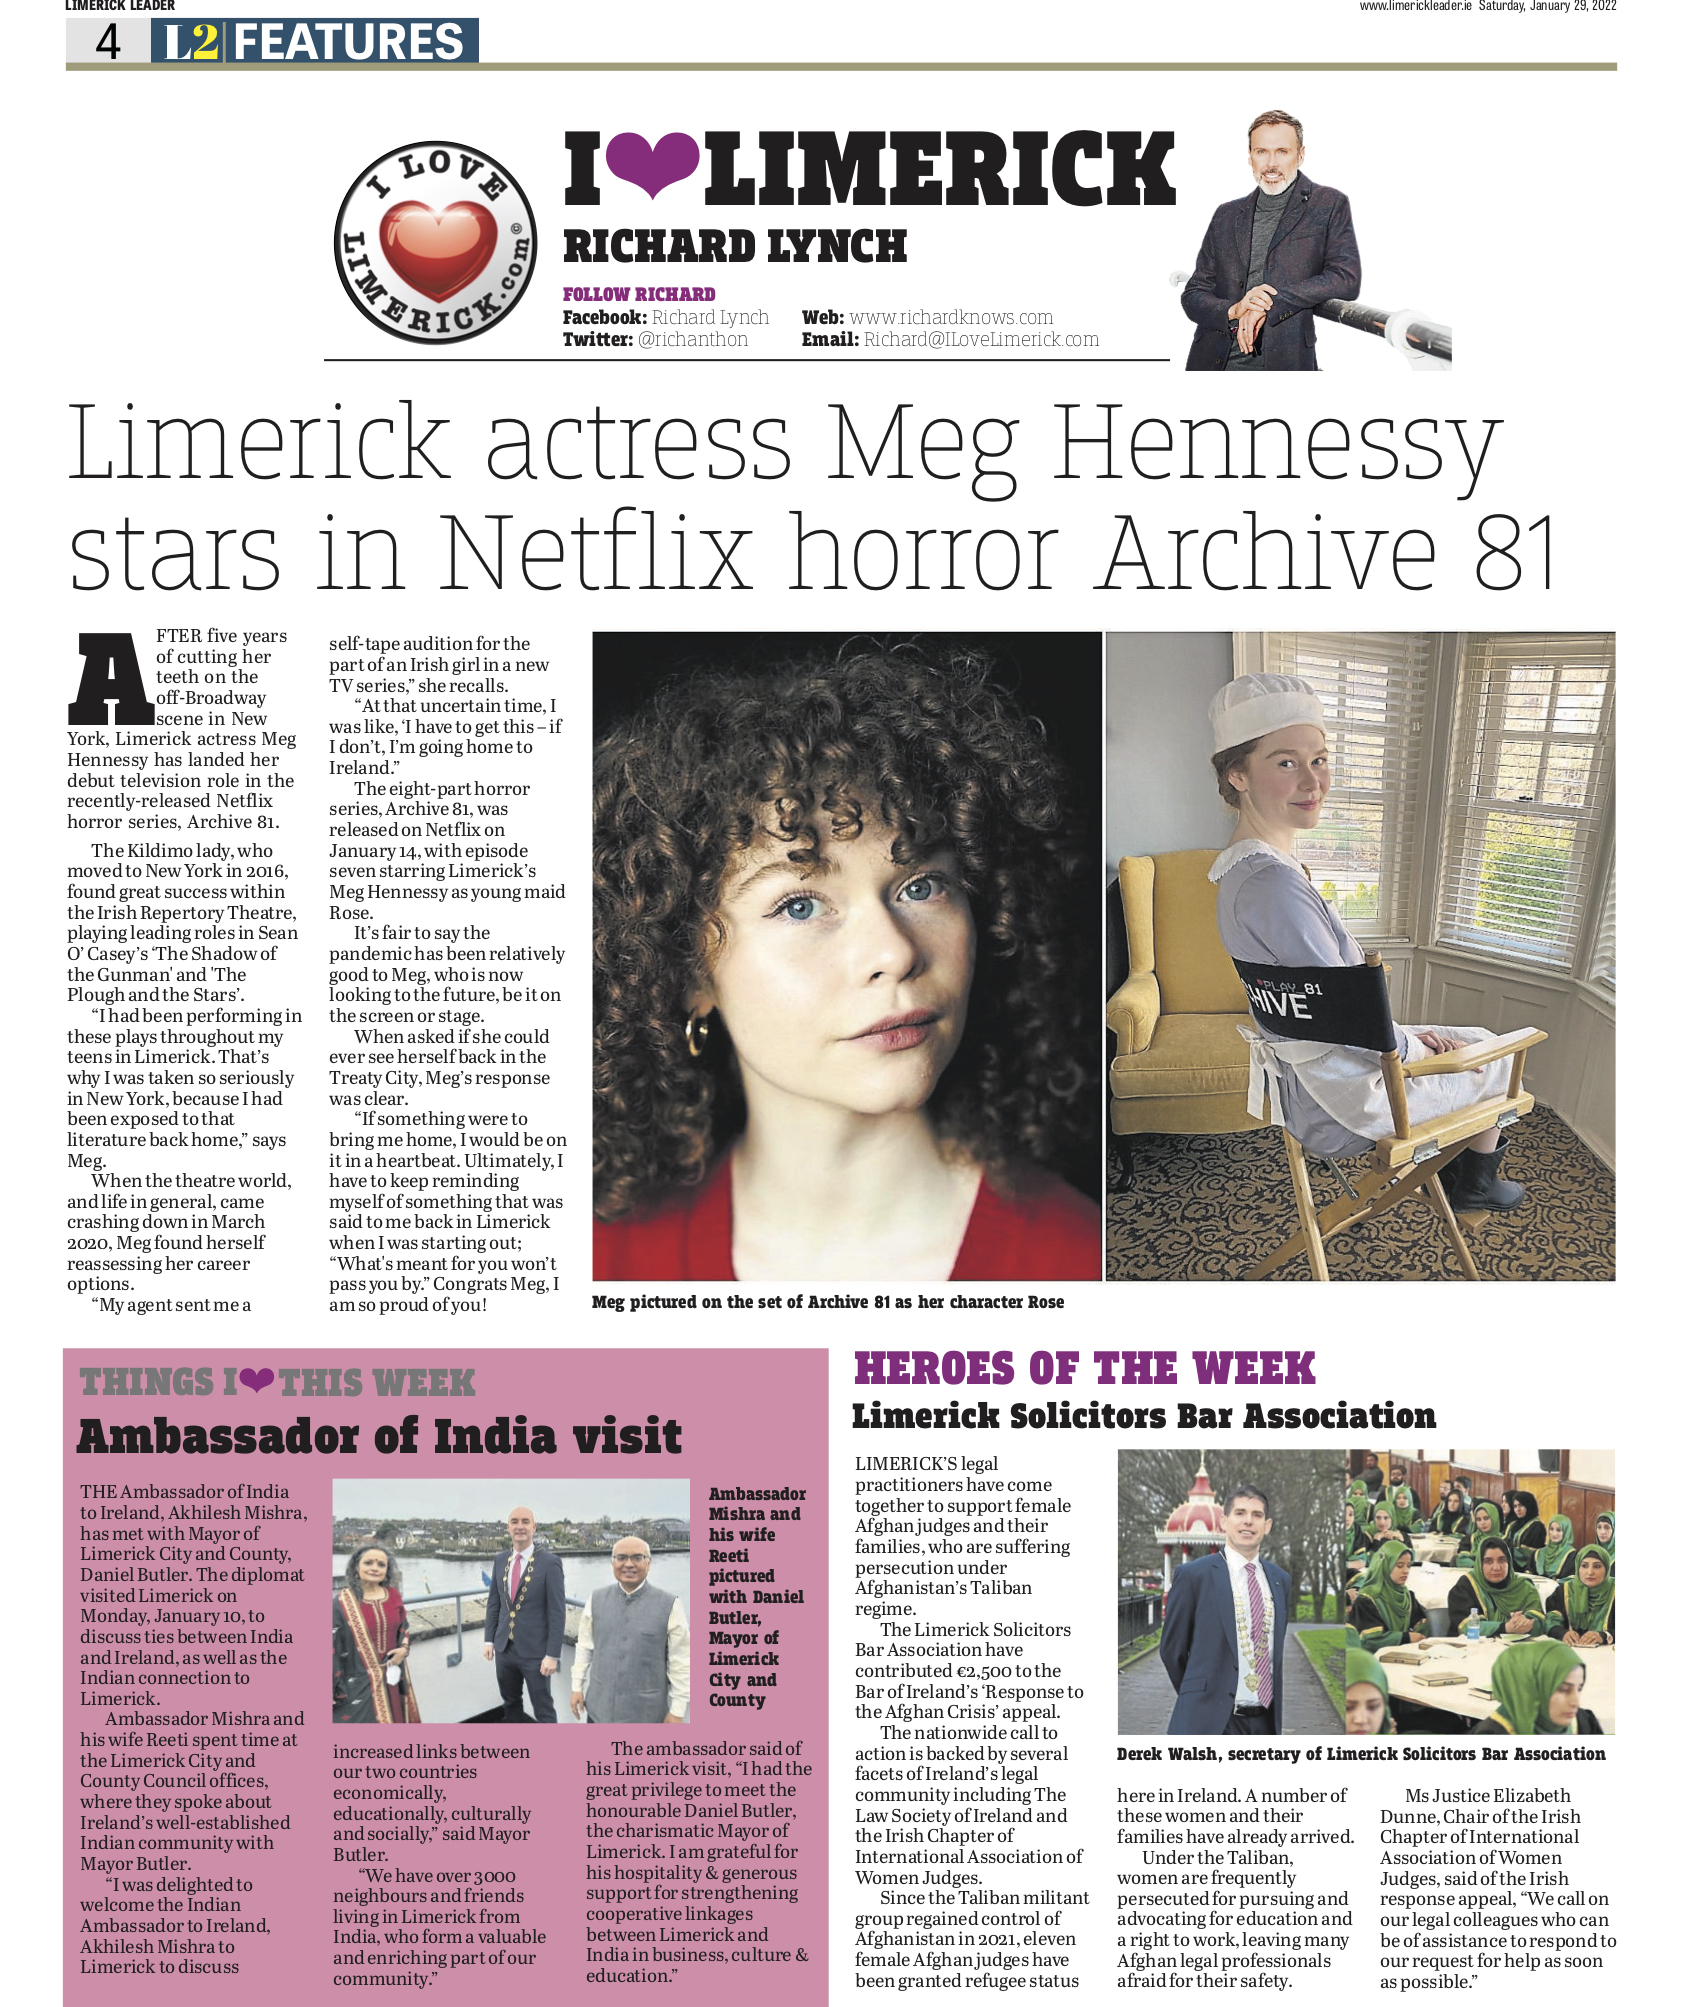 The Leader Column January 29 2022 - Limerick actress Meg Hennessy stars in Netflix horror Archive 81